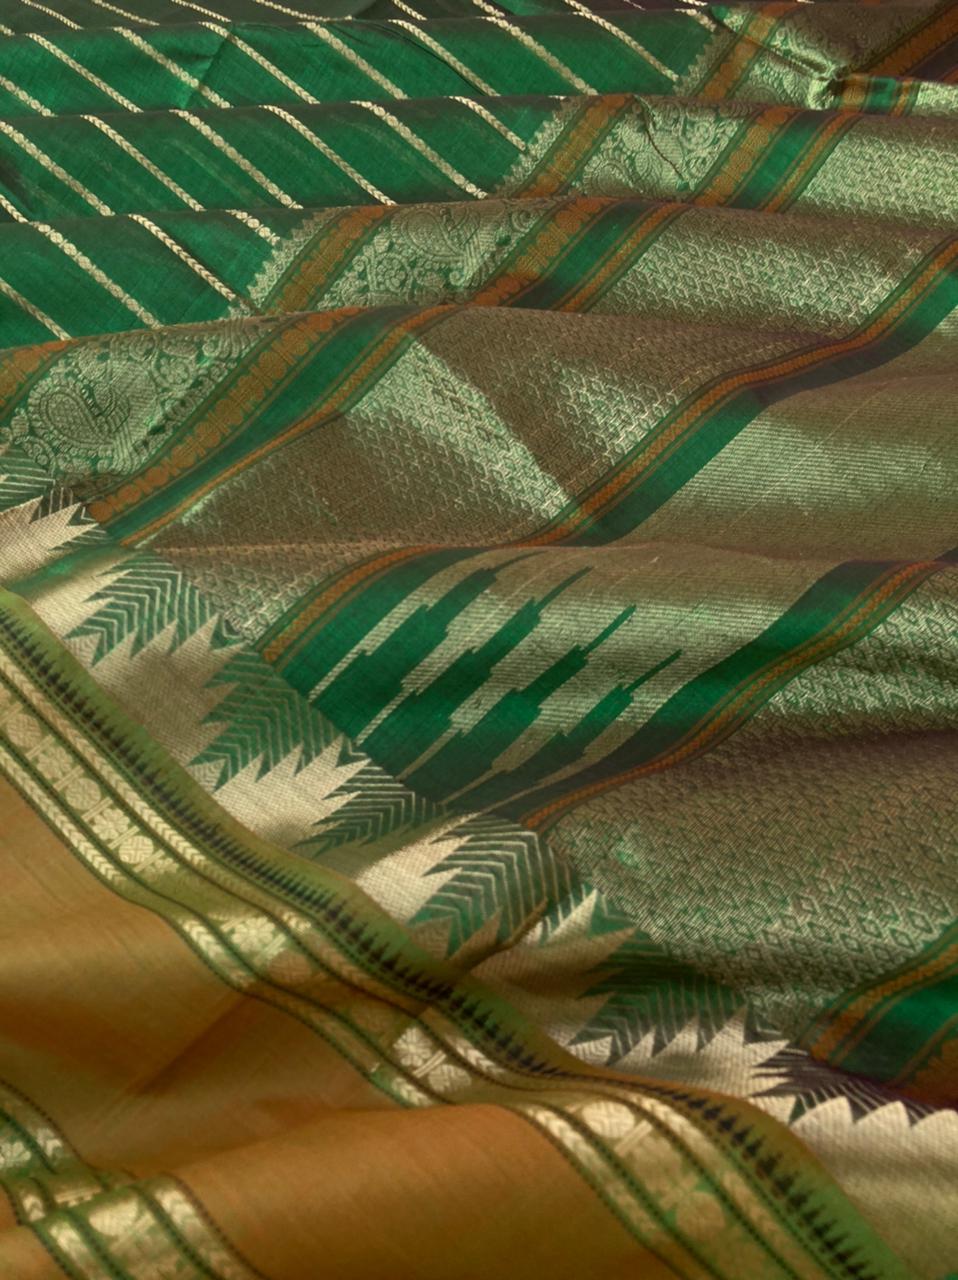 Zari Kissed Silk Cotton - algae green mixed maroon veldhari